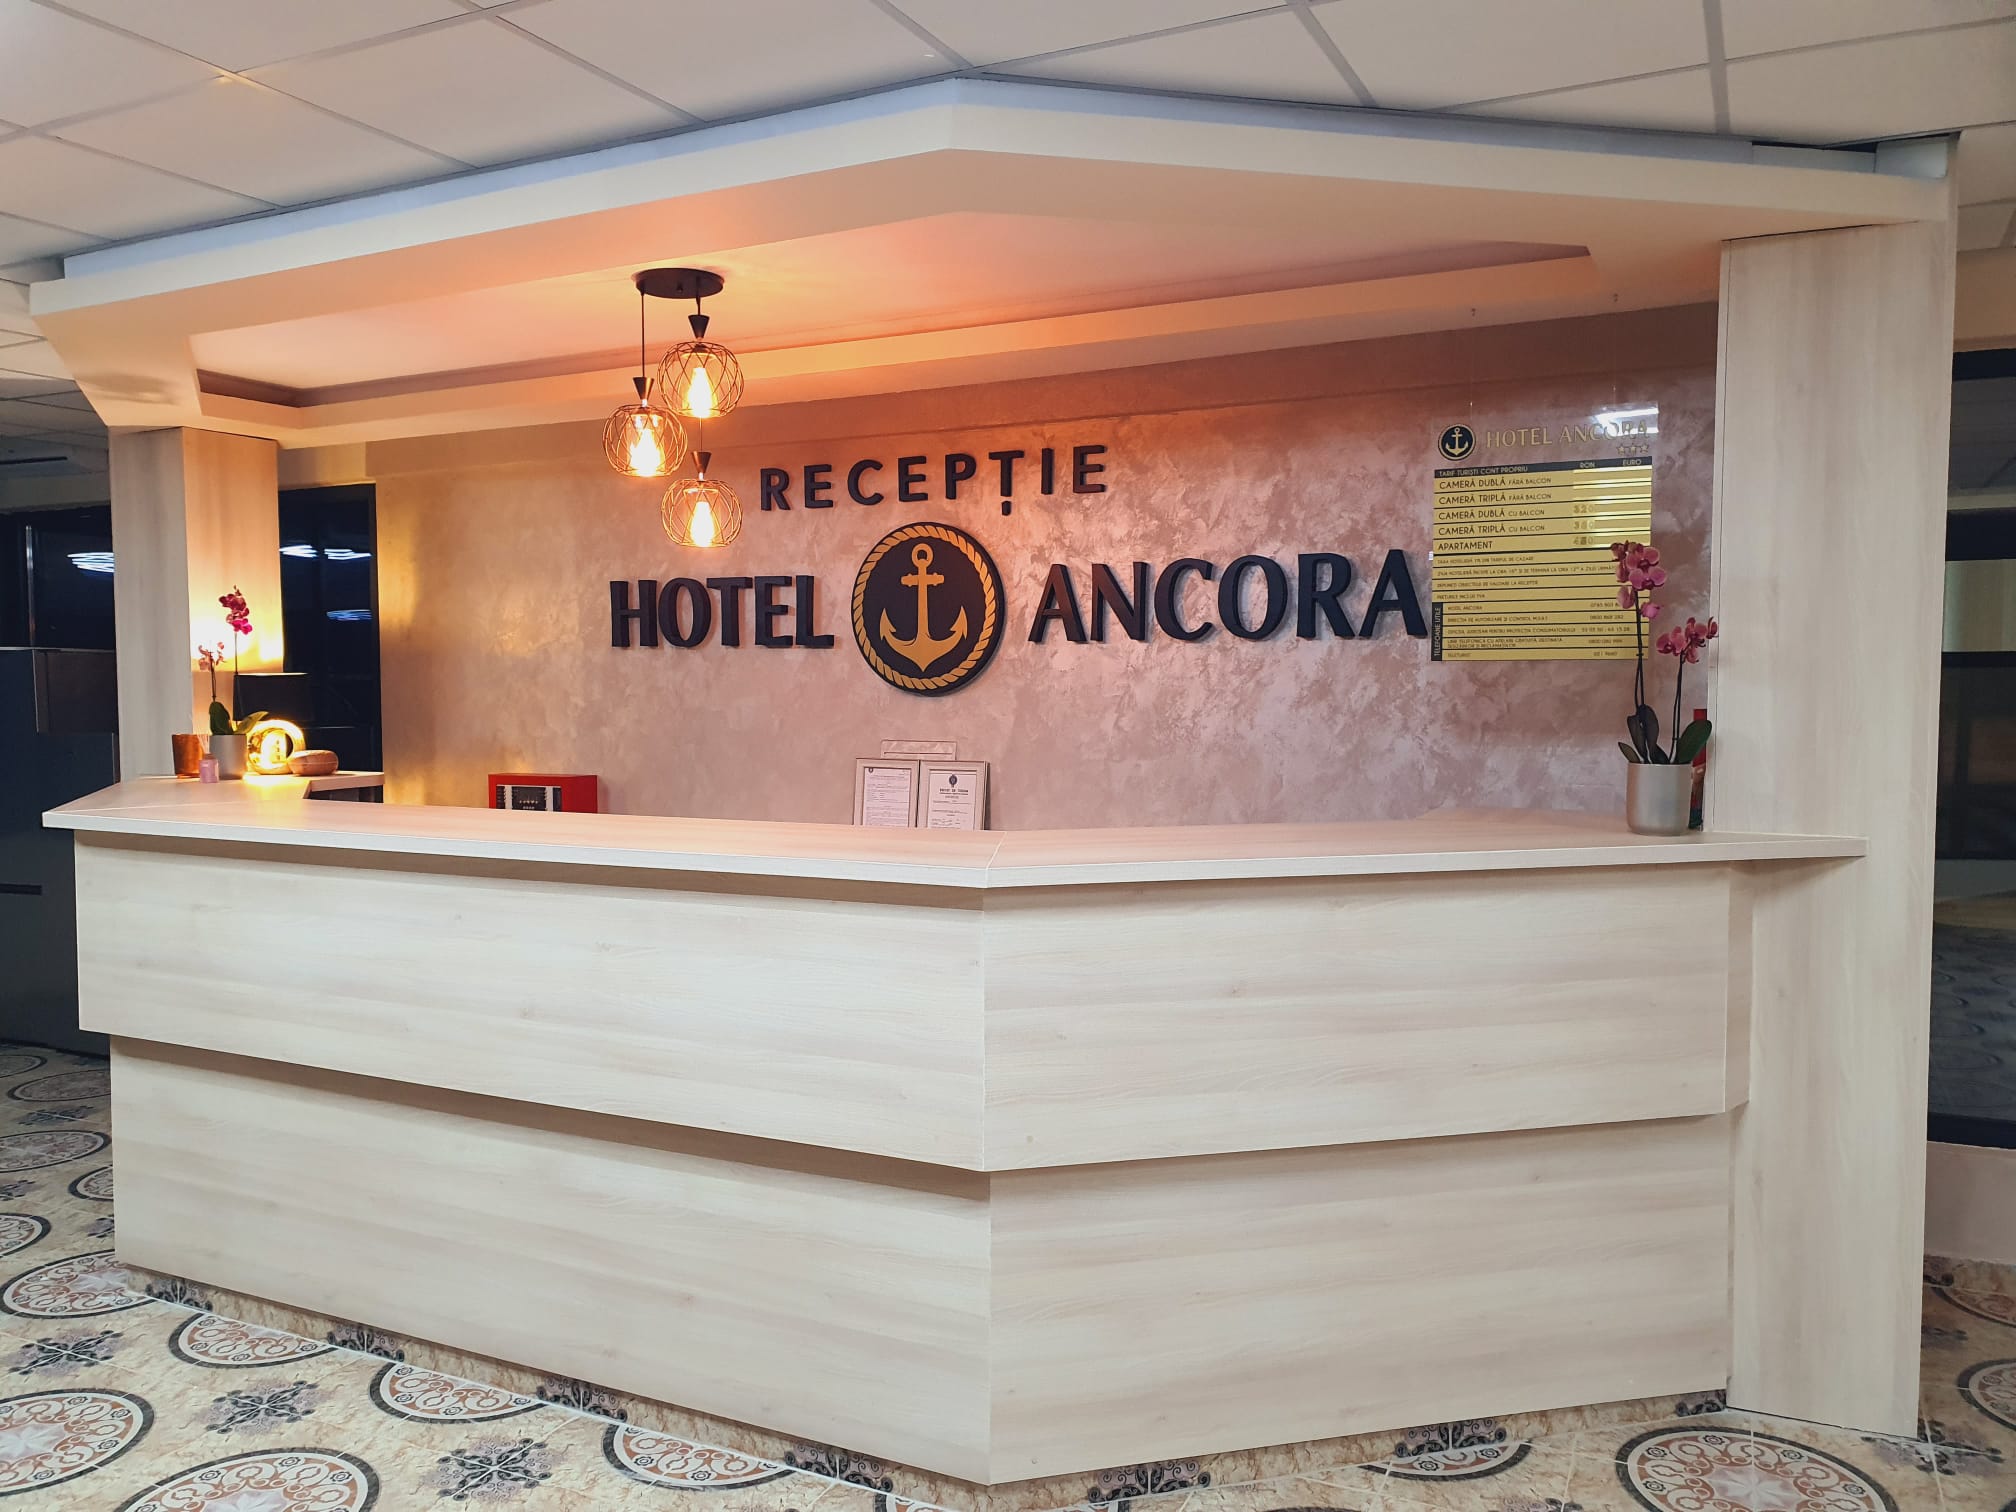 Hotel Ancora - receptie